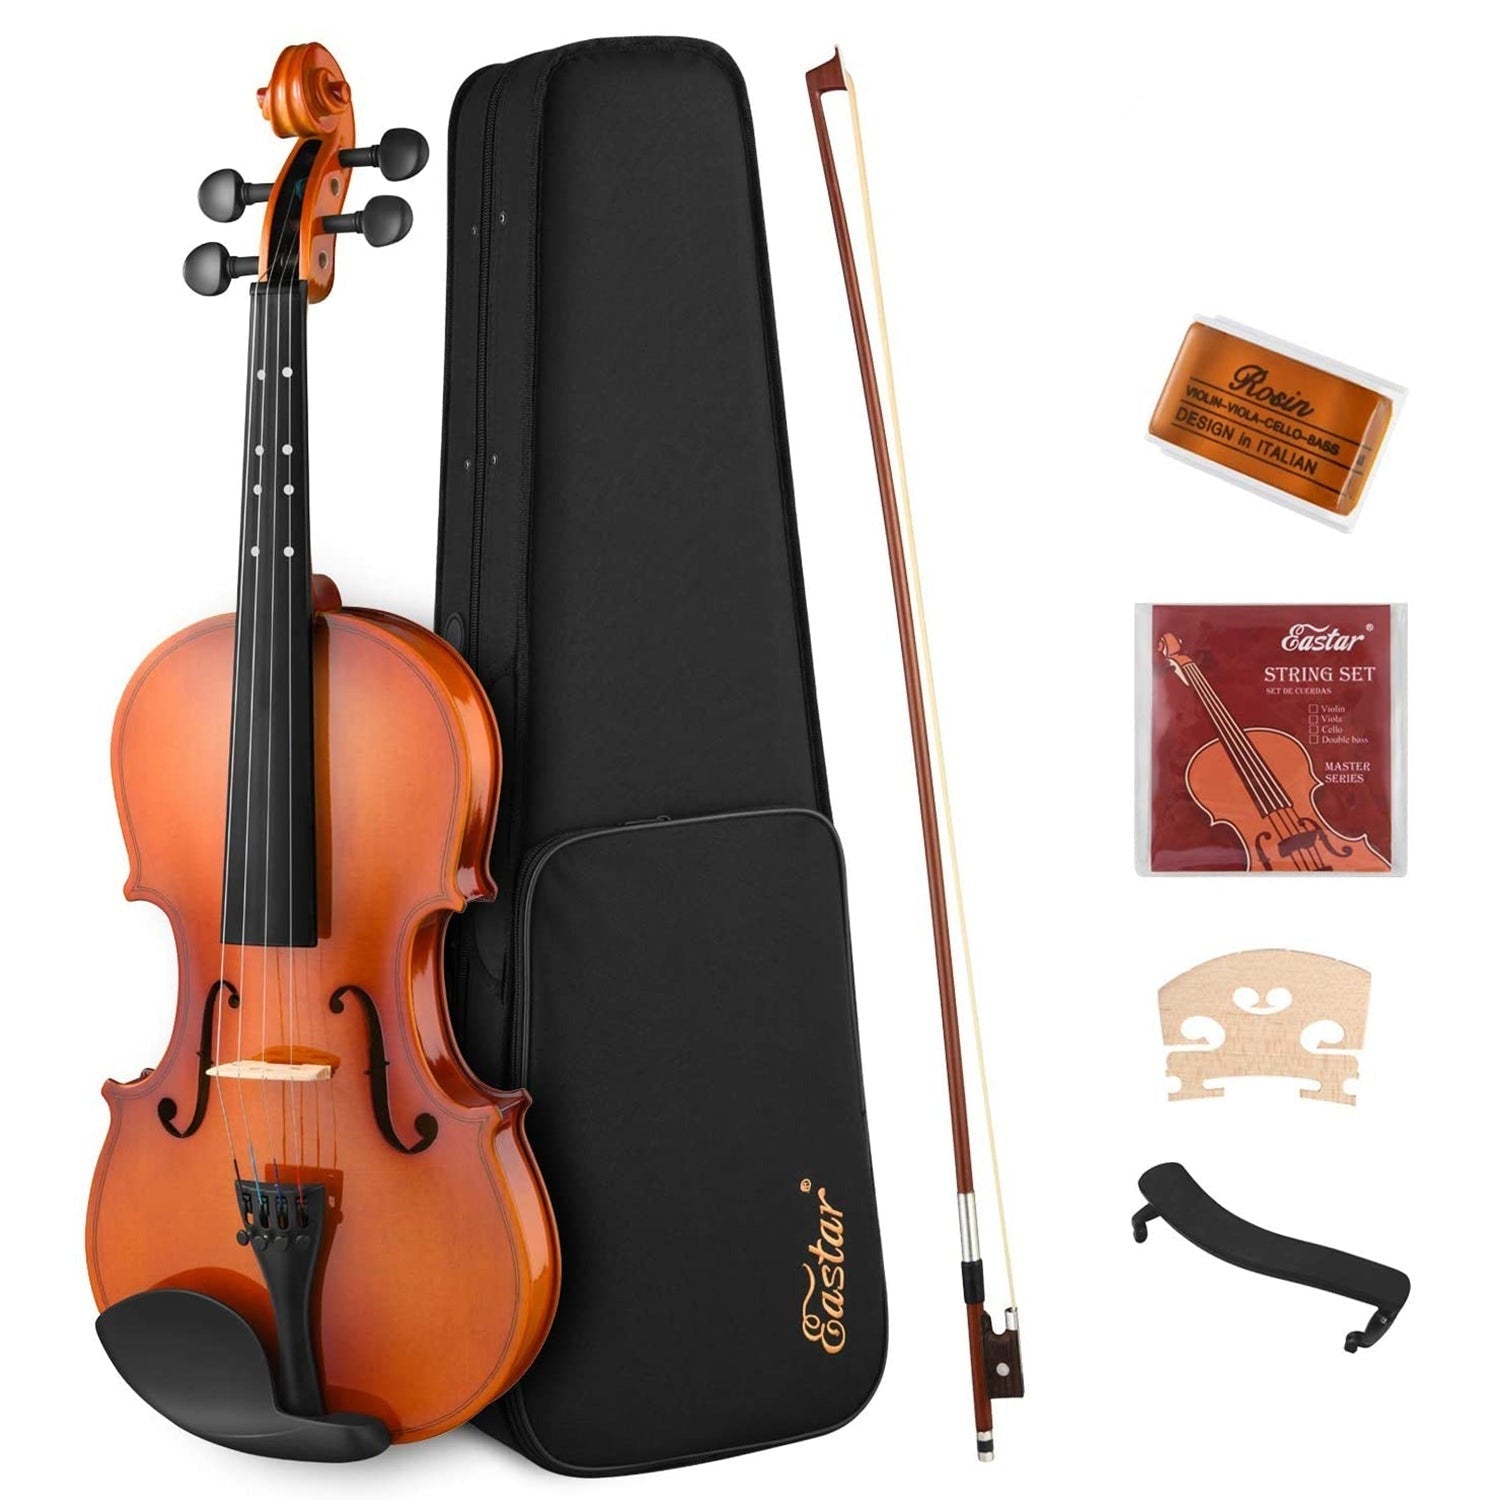 

Eastar EVA-2 1/2 Violin Set for Beginners with Hard Case/Rosin/Shoulder Rest/Bow/Extra Strings